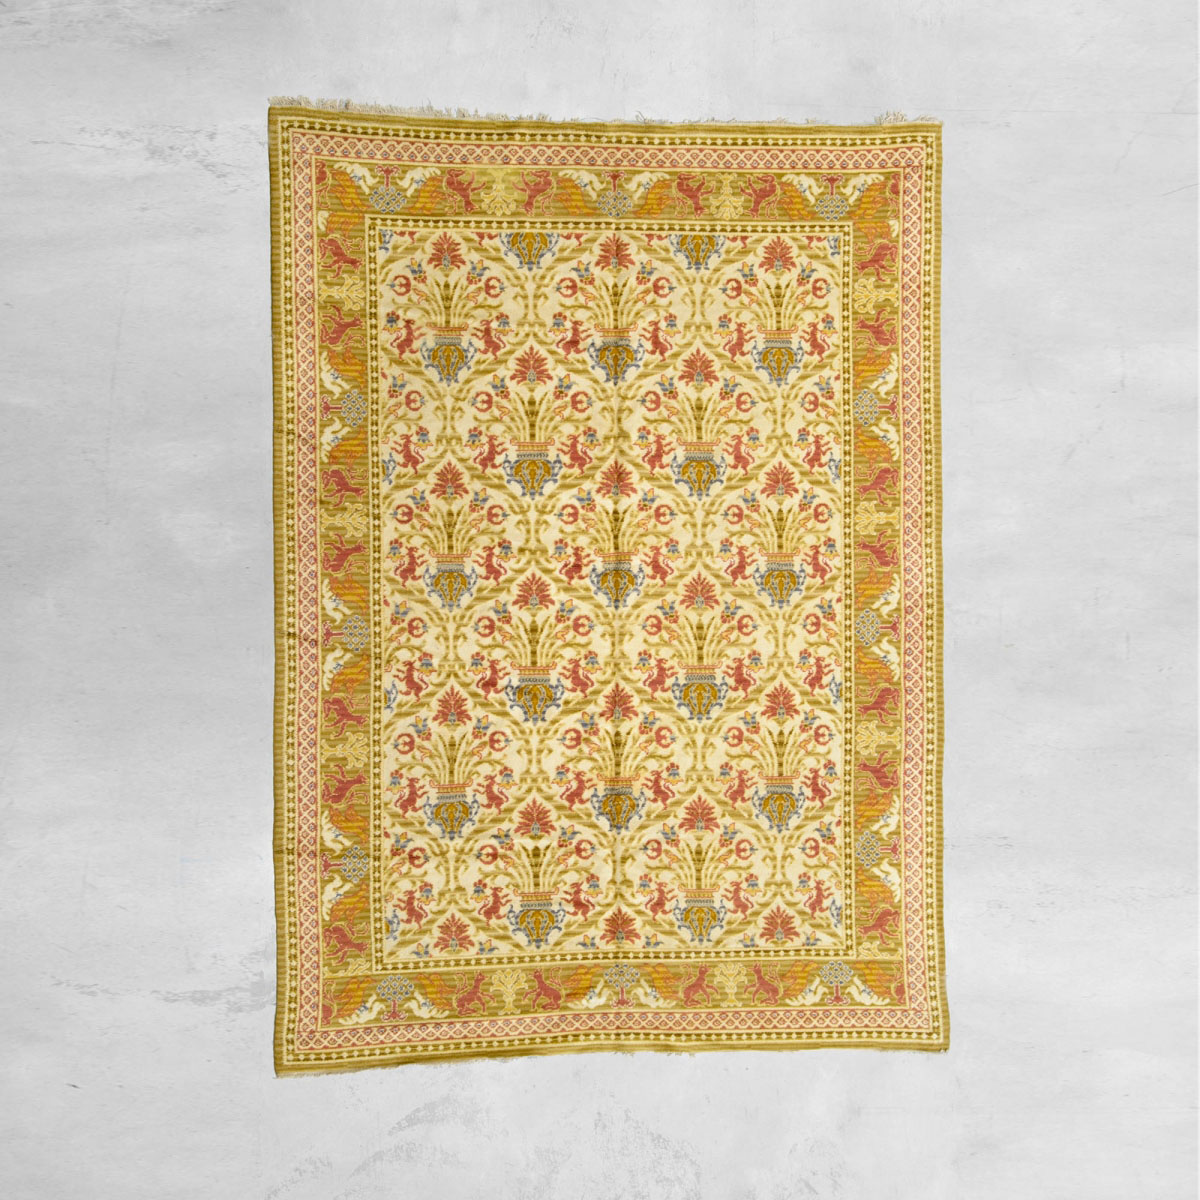 Cuenca carpet | 350 x 253 cm  Antique carpets - Spain  pic-1